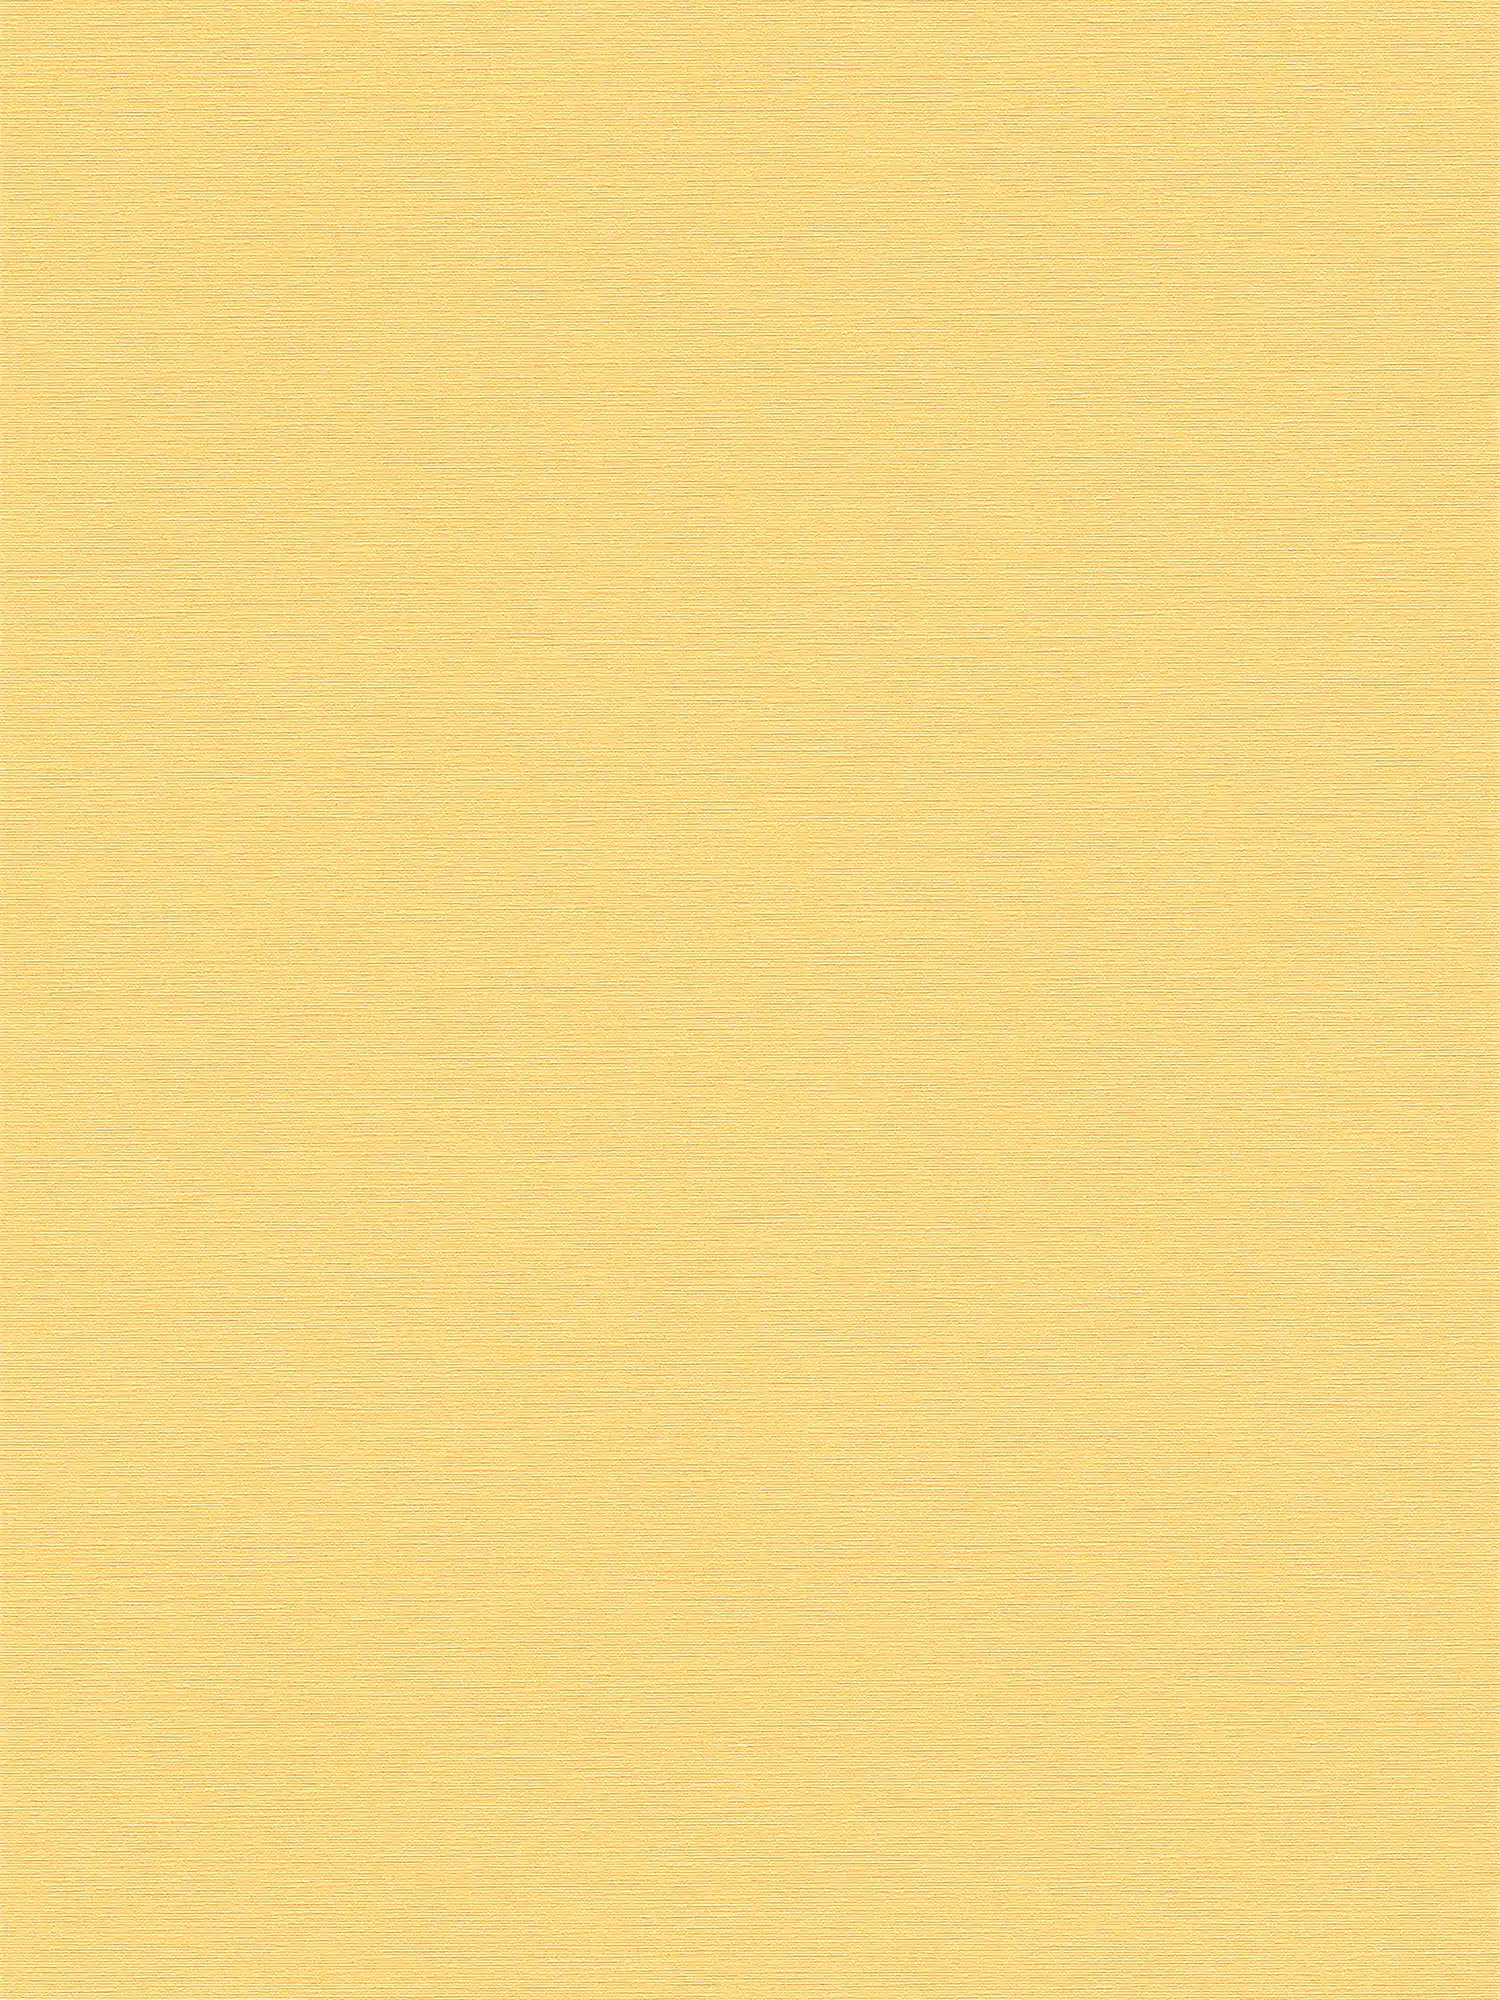 Carta da parati in tessuto non tessuto a tinta unita con effetto lino - giallo
